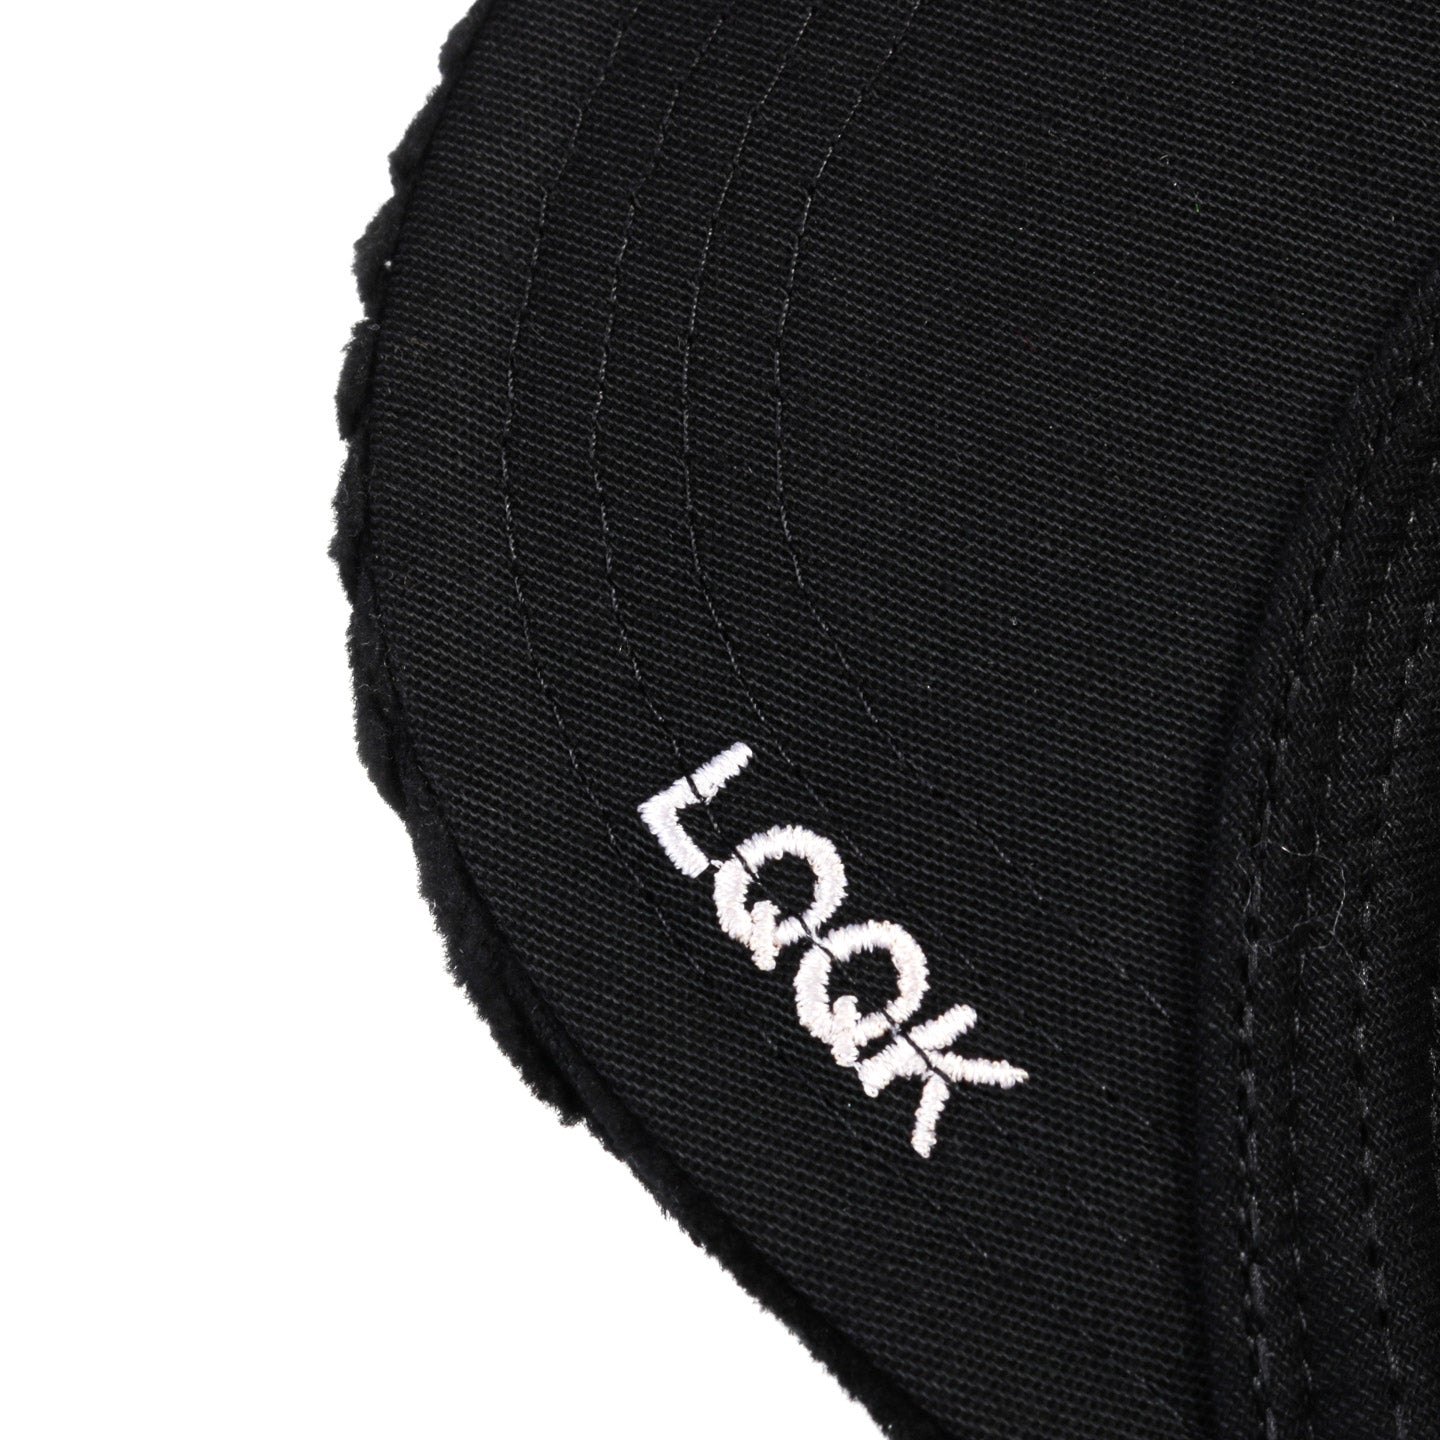 LQQK STUDIO VERY HEAVY HAT BLACK CORD